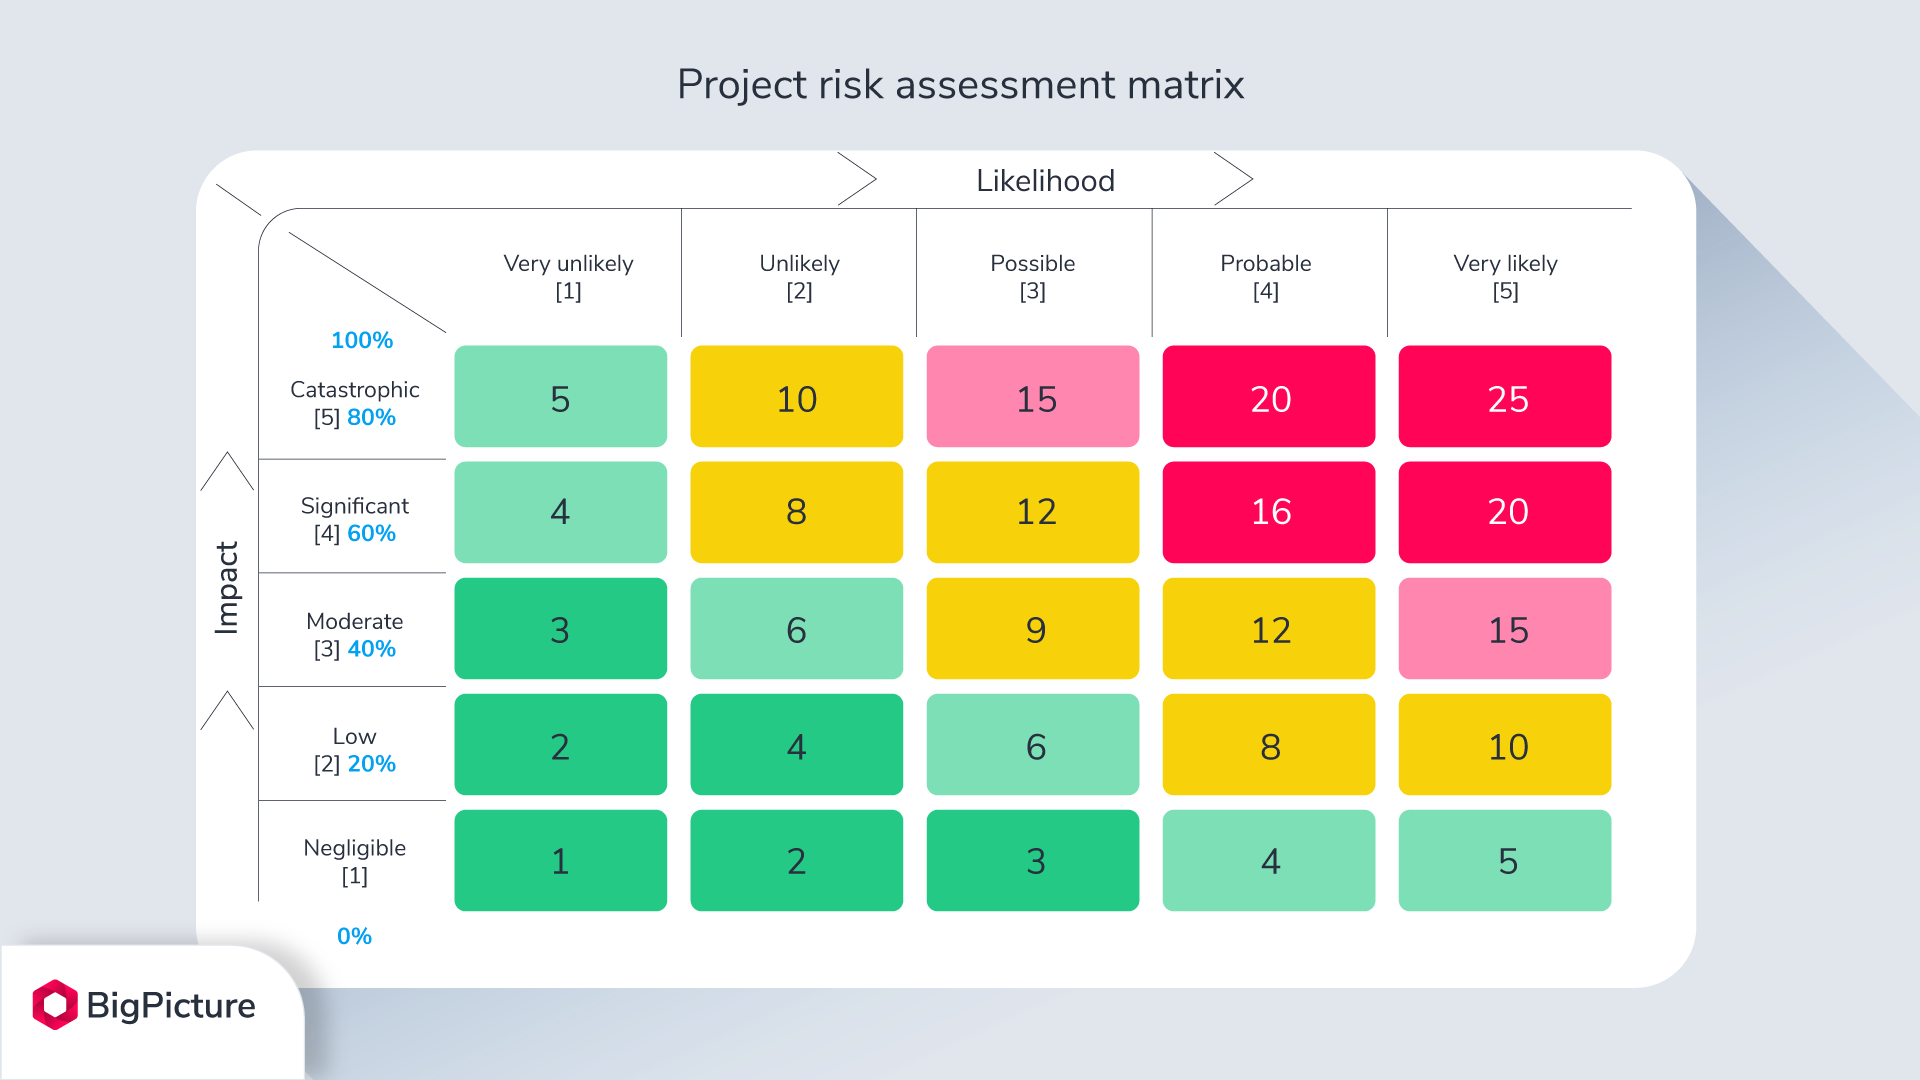 Project risk assessment heatmap/matrix in color.